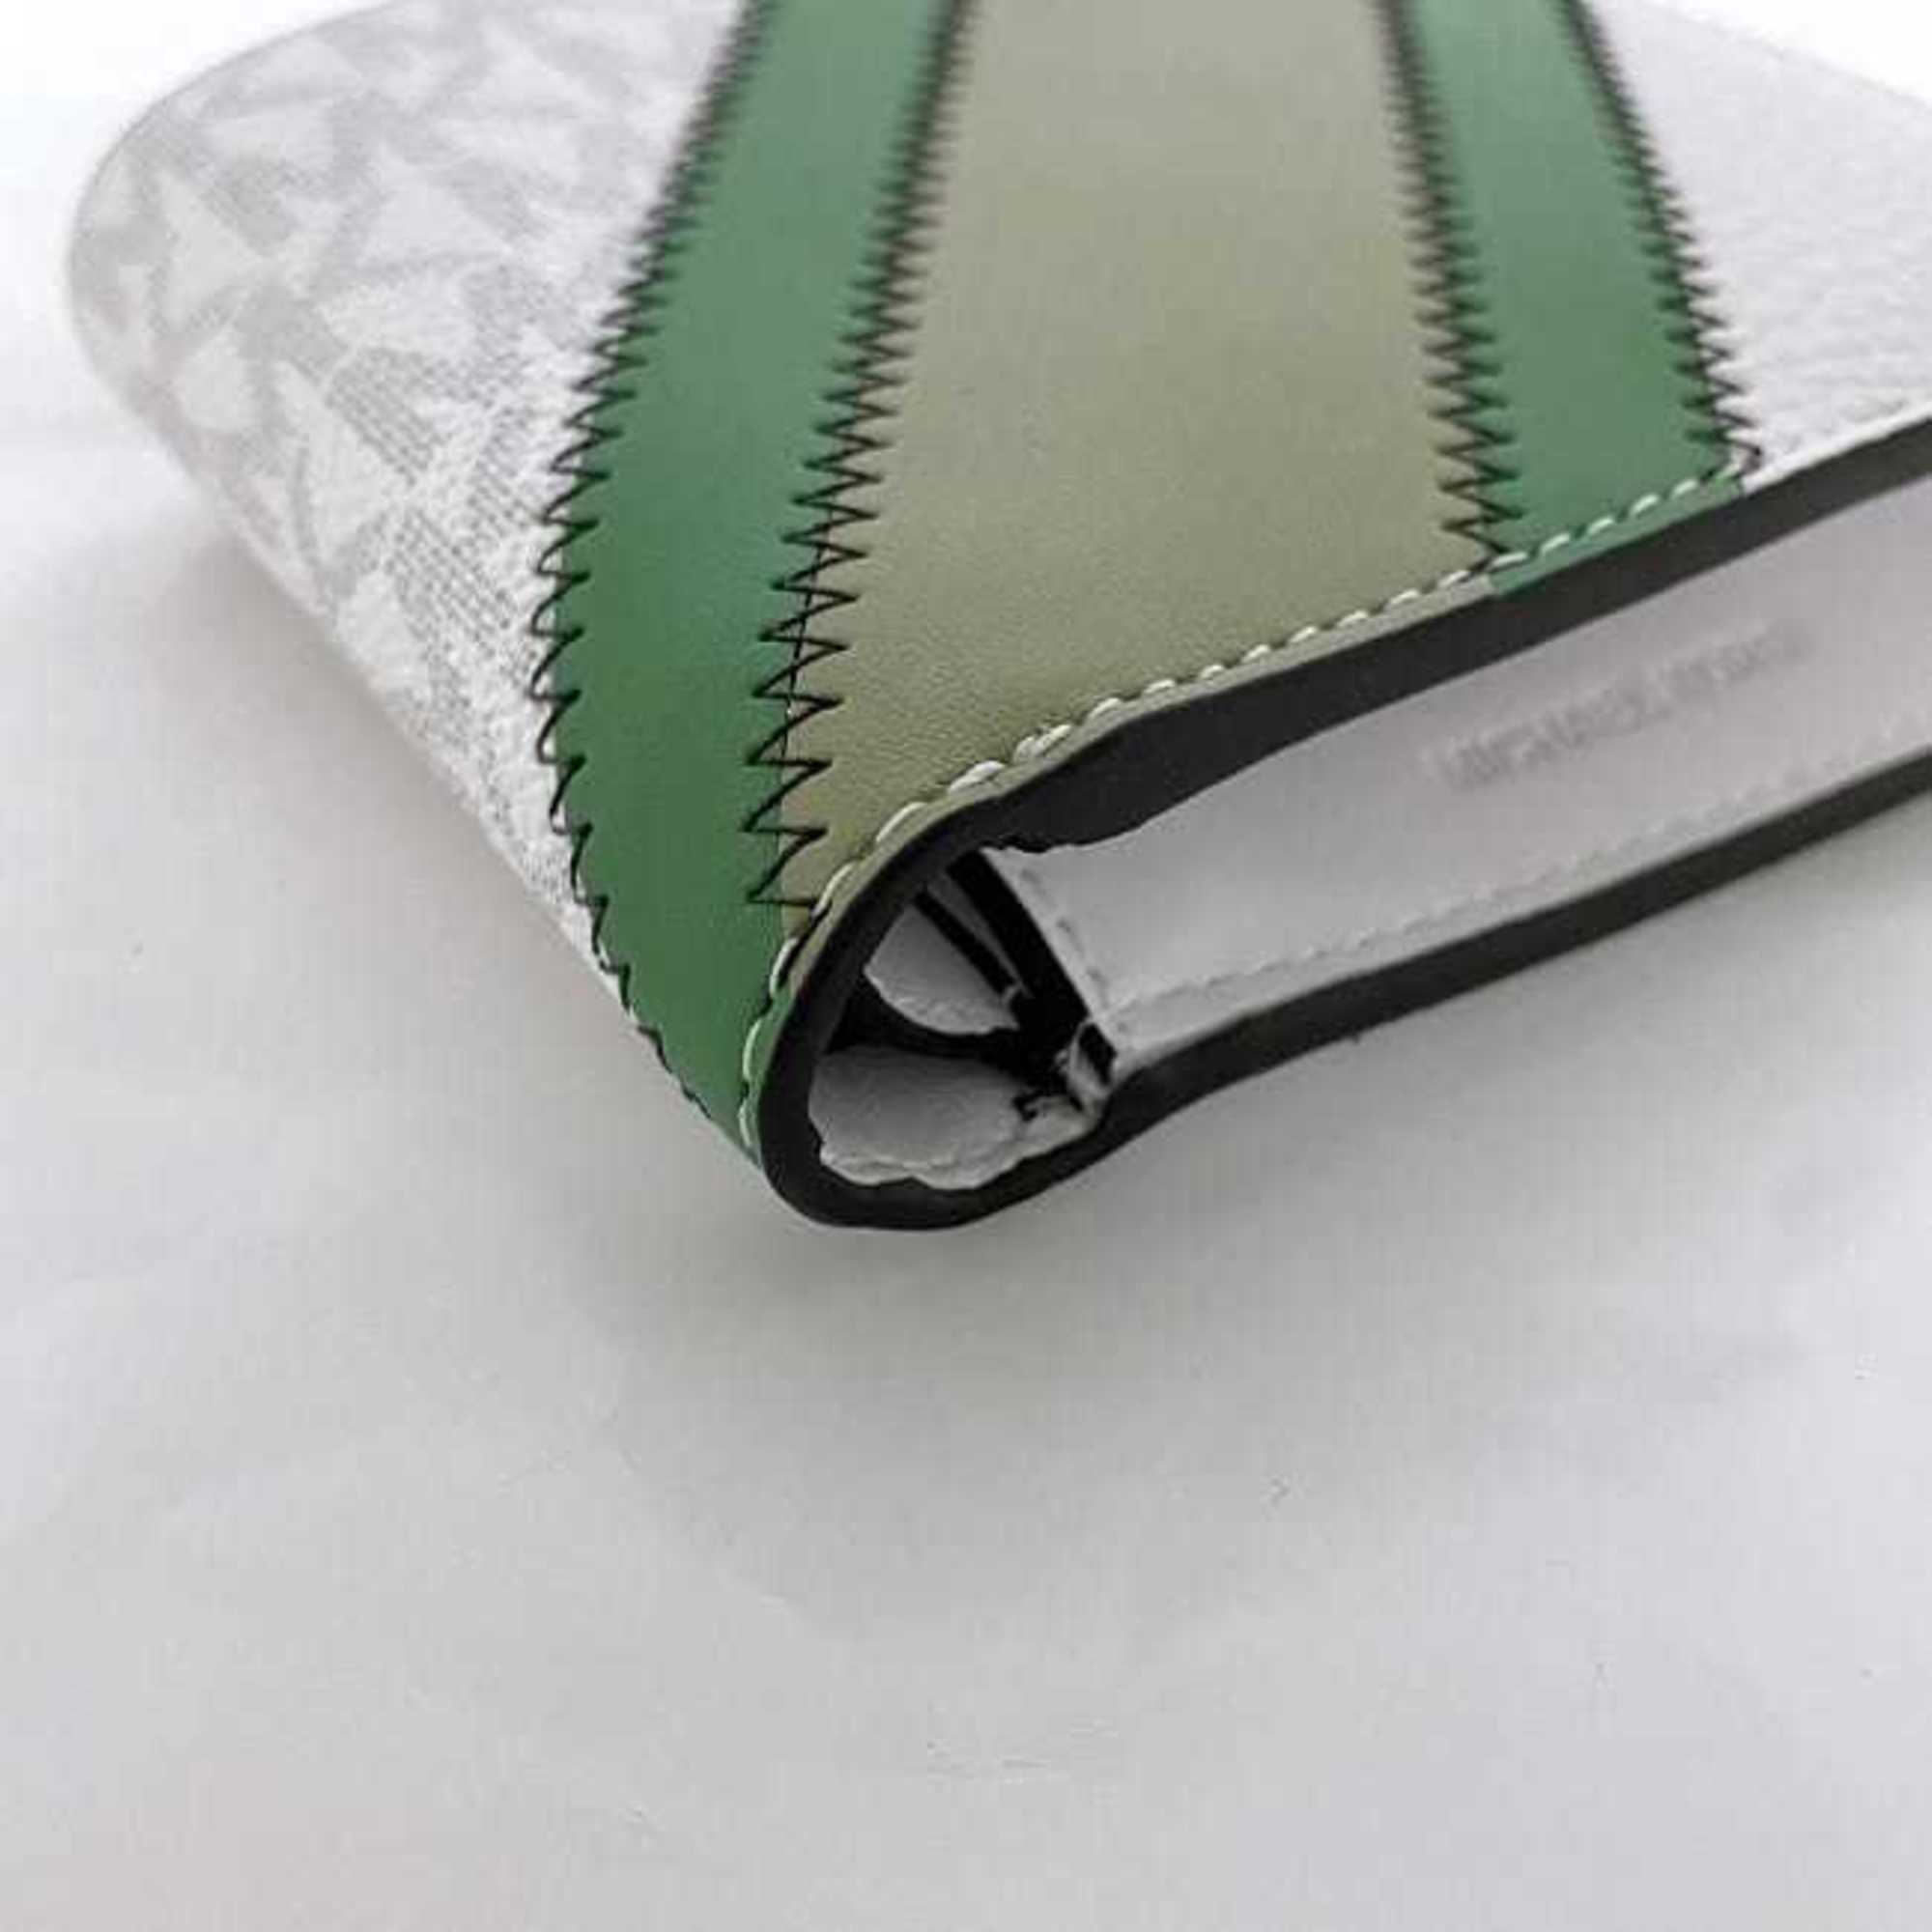 Michael Kors Bifold Wallet White Green Khaki 36R3LCOF3U Folding Leather MICHAEL KORS Stripe Patchwork Stitching Women's Compact